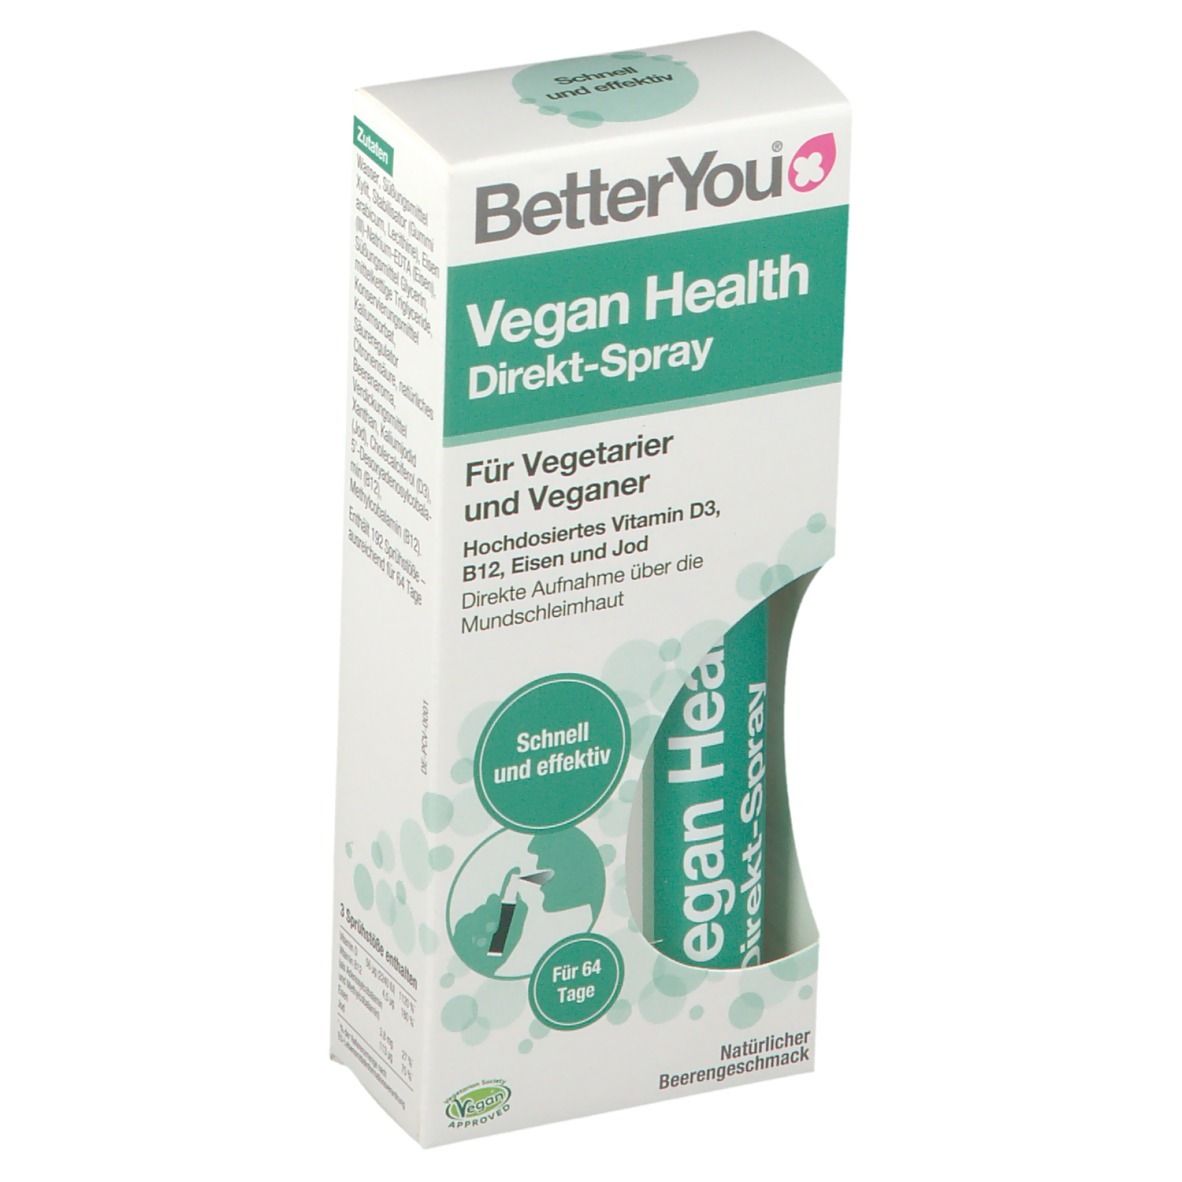 Roha Arzneimittel GmbH BetterYou® Vegan Health Direkt-Spray